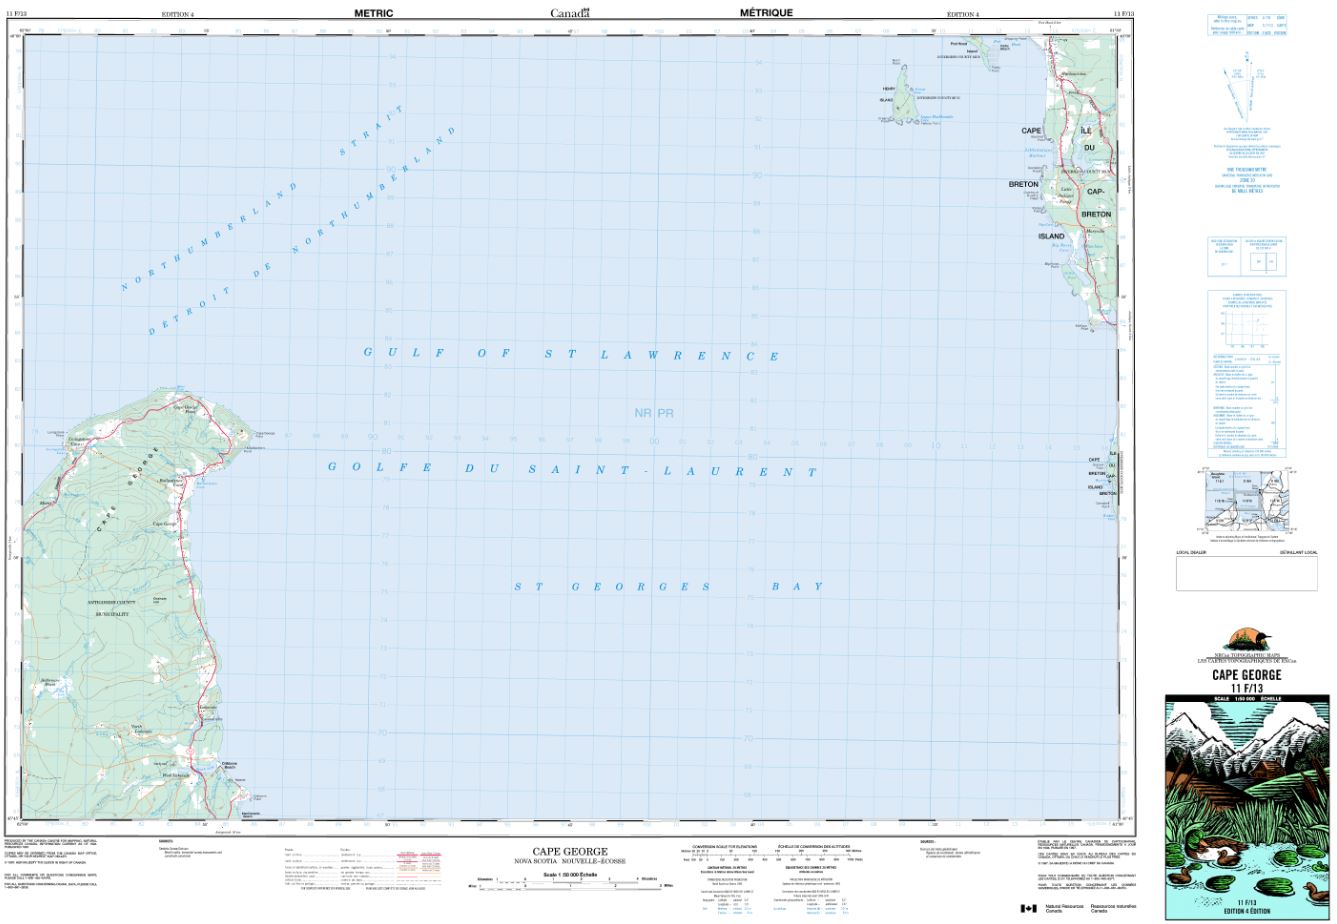 11F/13 Cape George Topographic Map Nova Scotia Tyvek